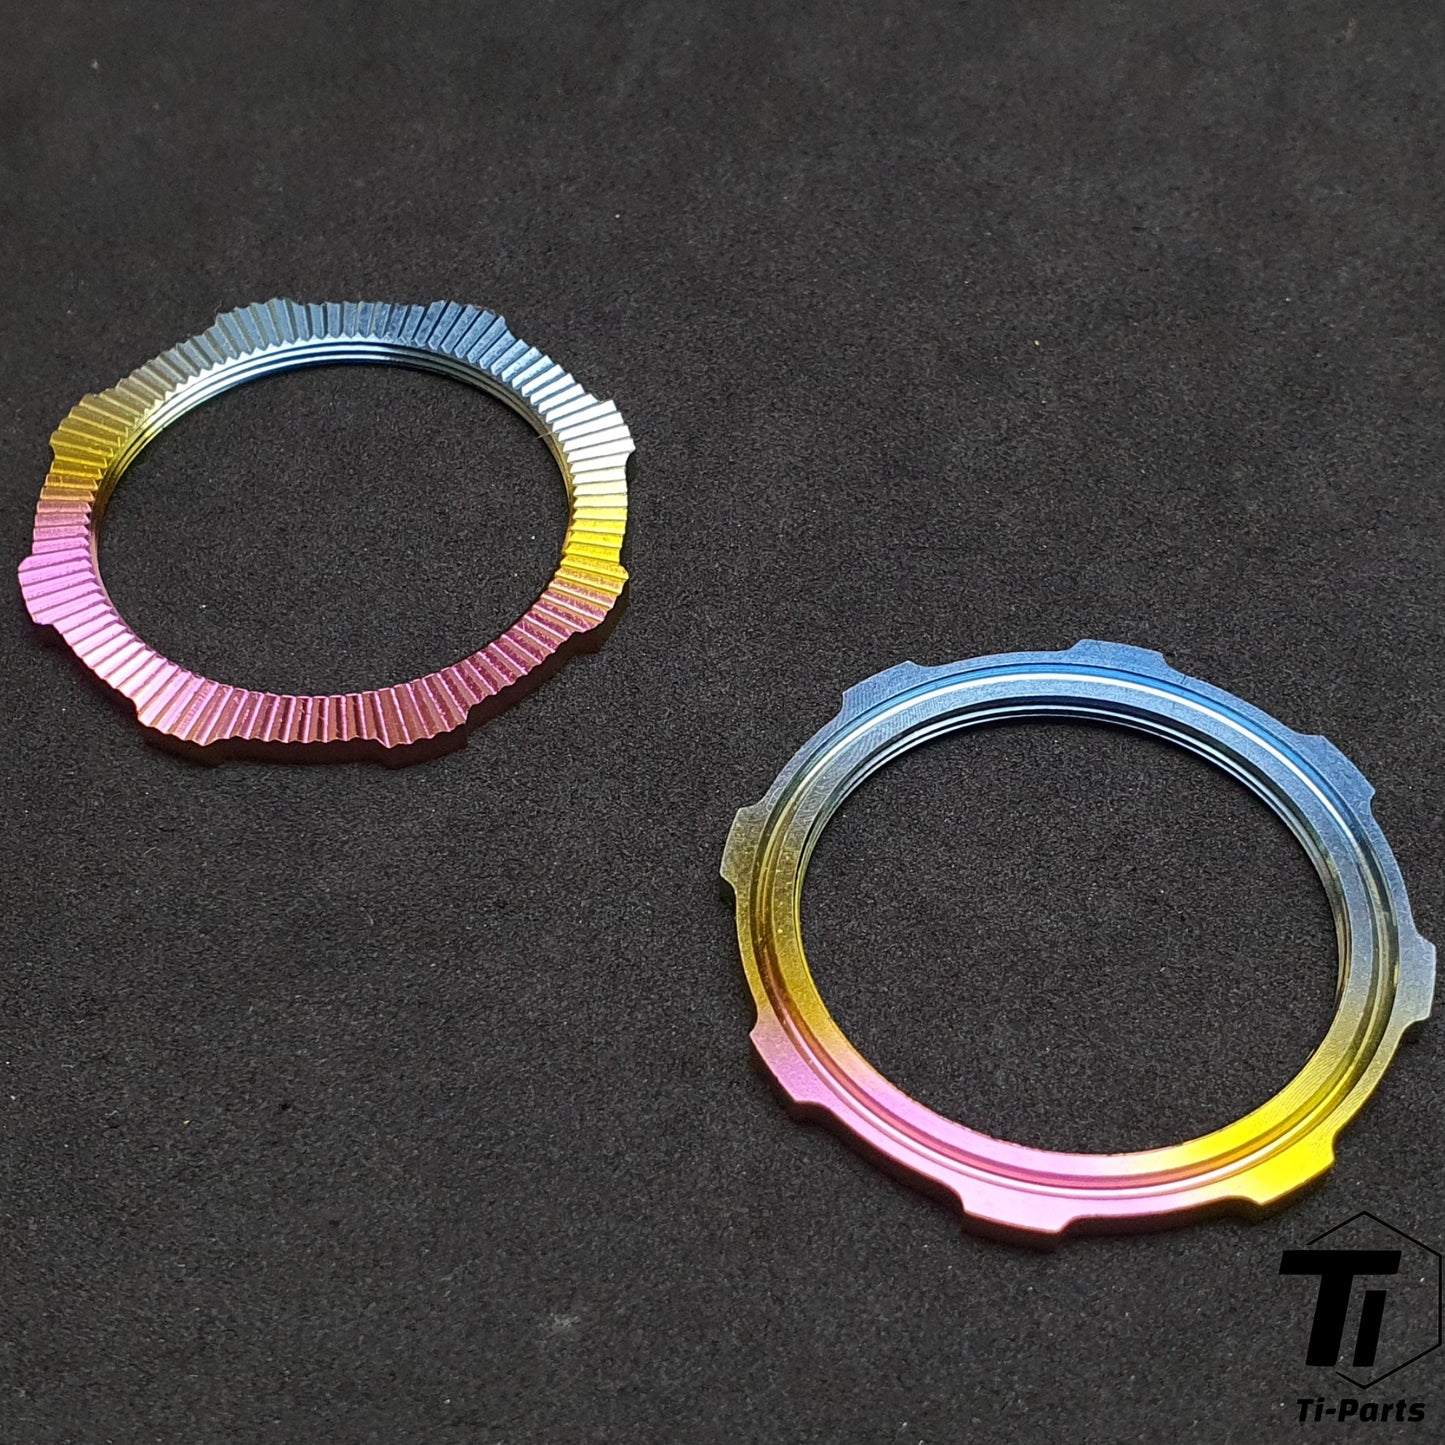 Campy Centerlock prsten od titana za BORA Ultra WTO Fulcrum Hyperon Wheelset | Campagnolo Carbon Racing Zero | Razred 5 Tit